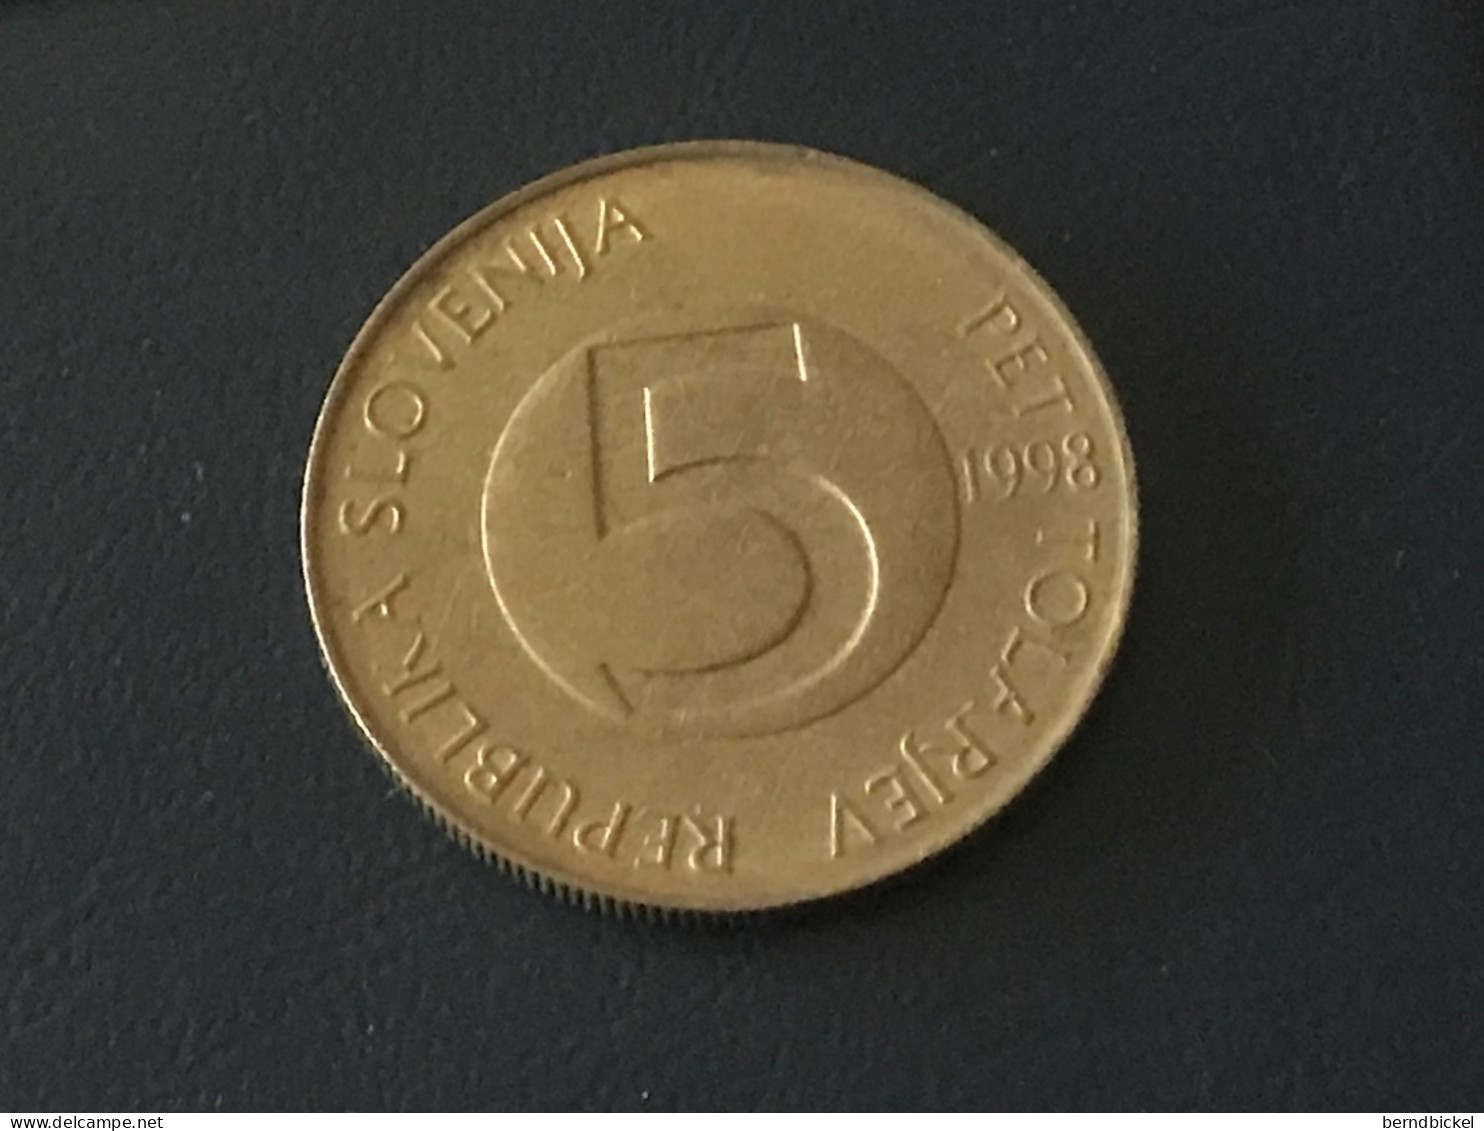 Münze Münzen Umlaufmünze Slowenien 5 Tolar 1998 - Slowenien